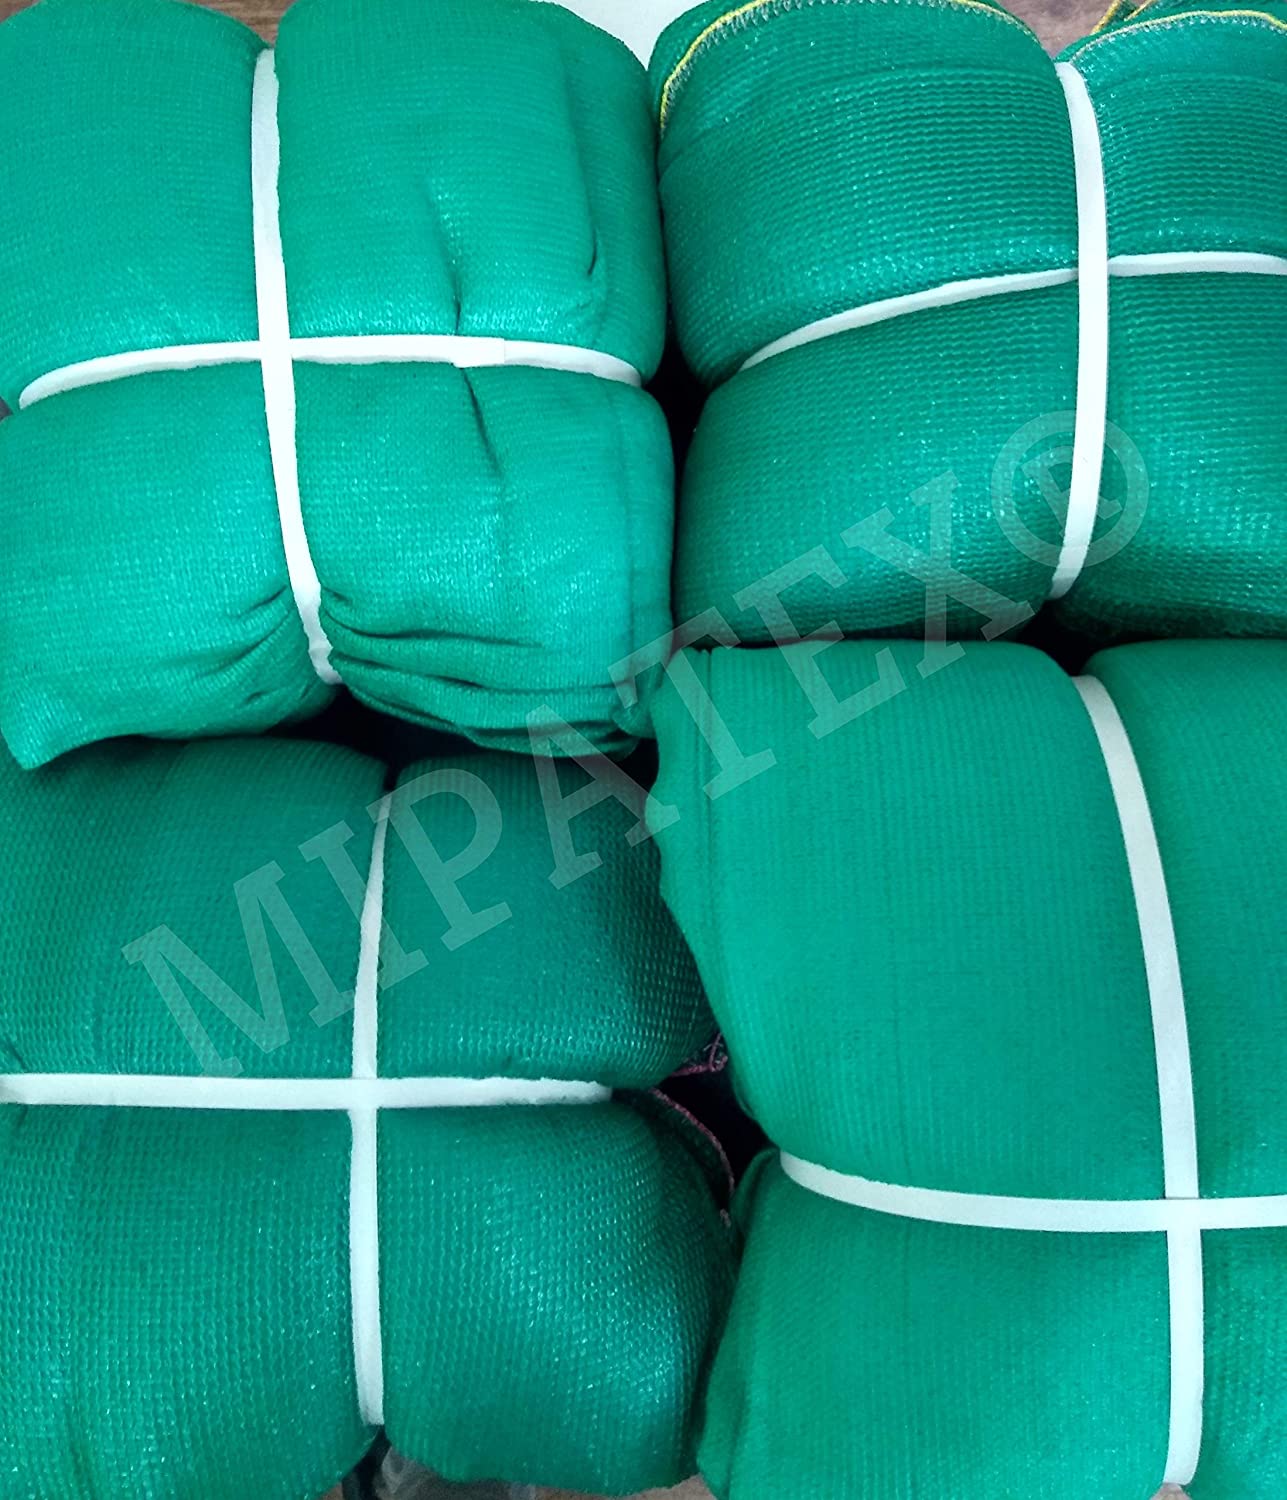 Mipatex Shade Net With Aluminium Eyelets & Rope (50% UV Stablized)